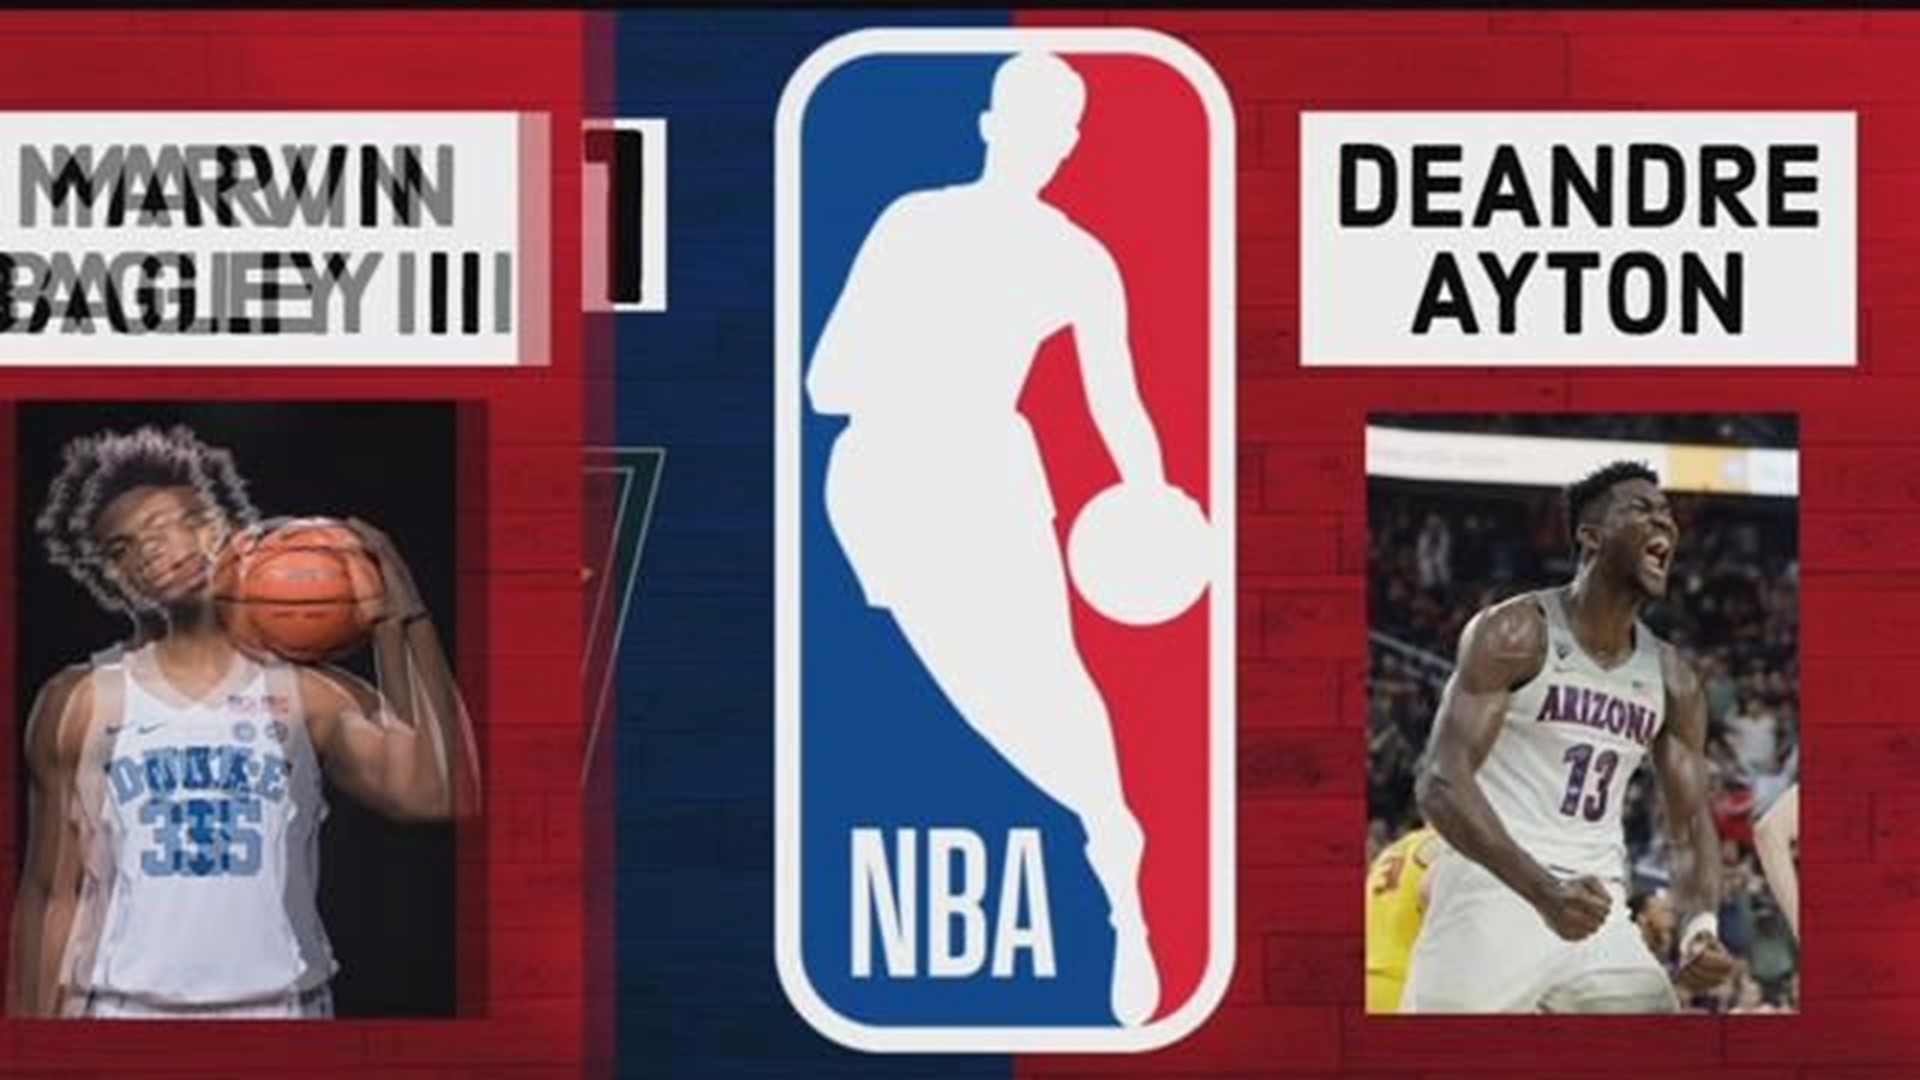 2018 NBA Draft results